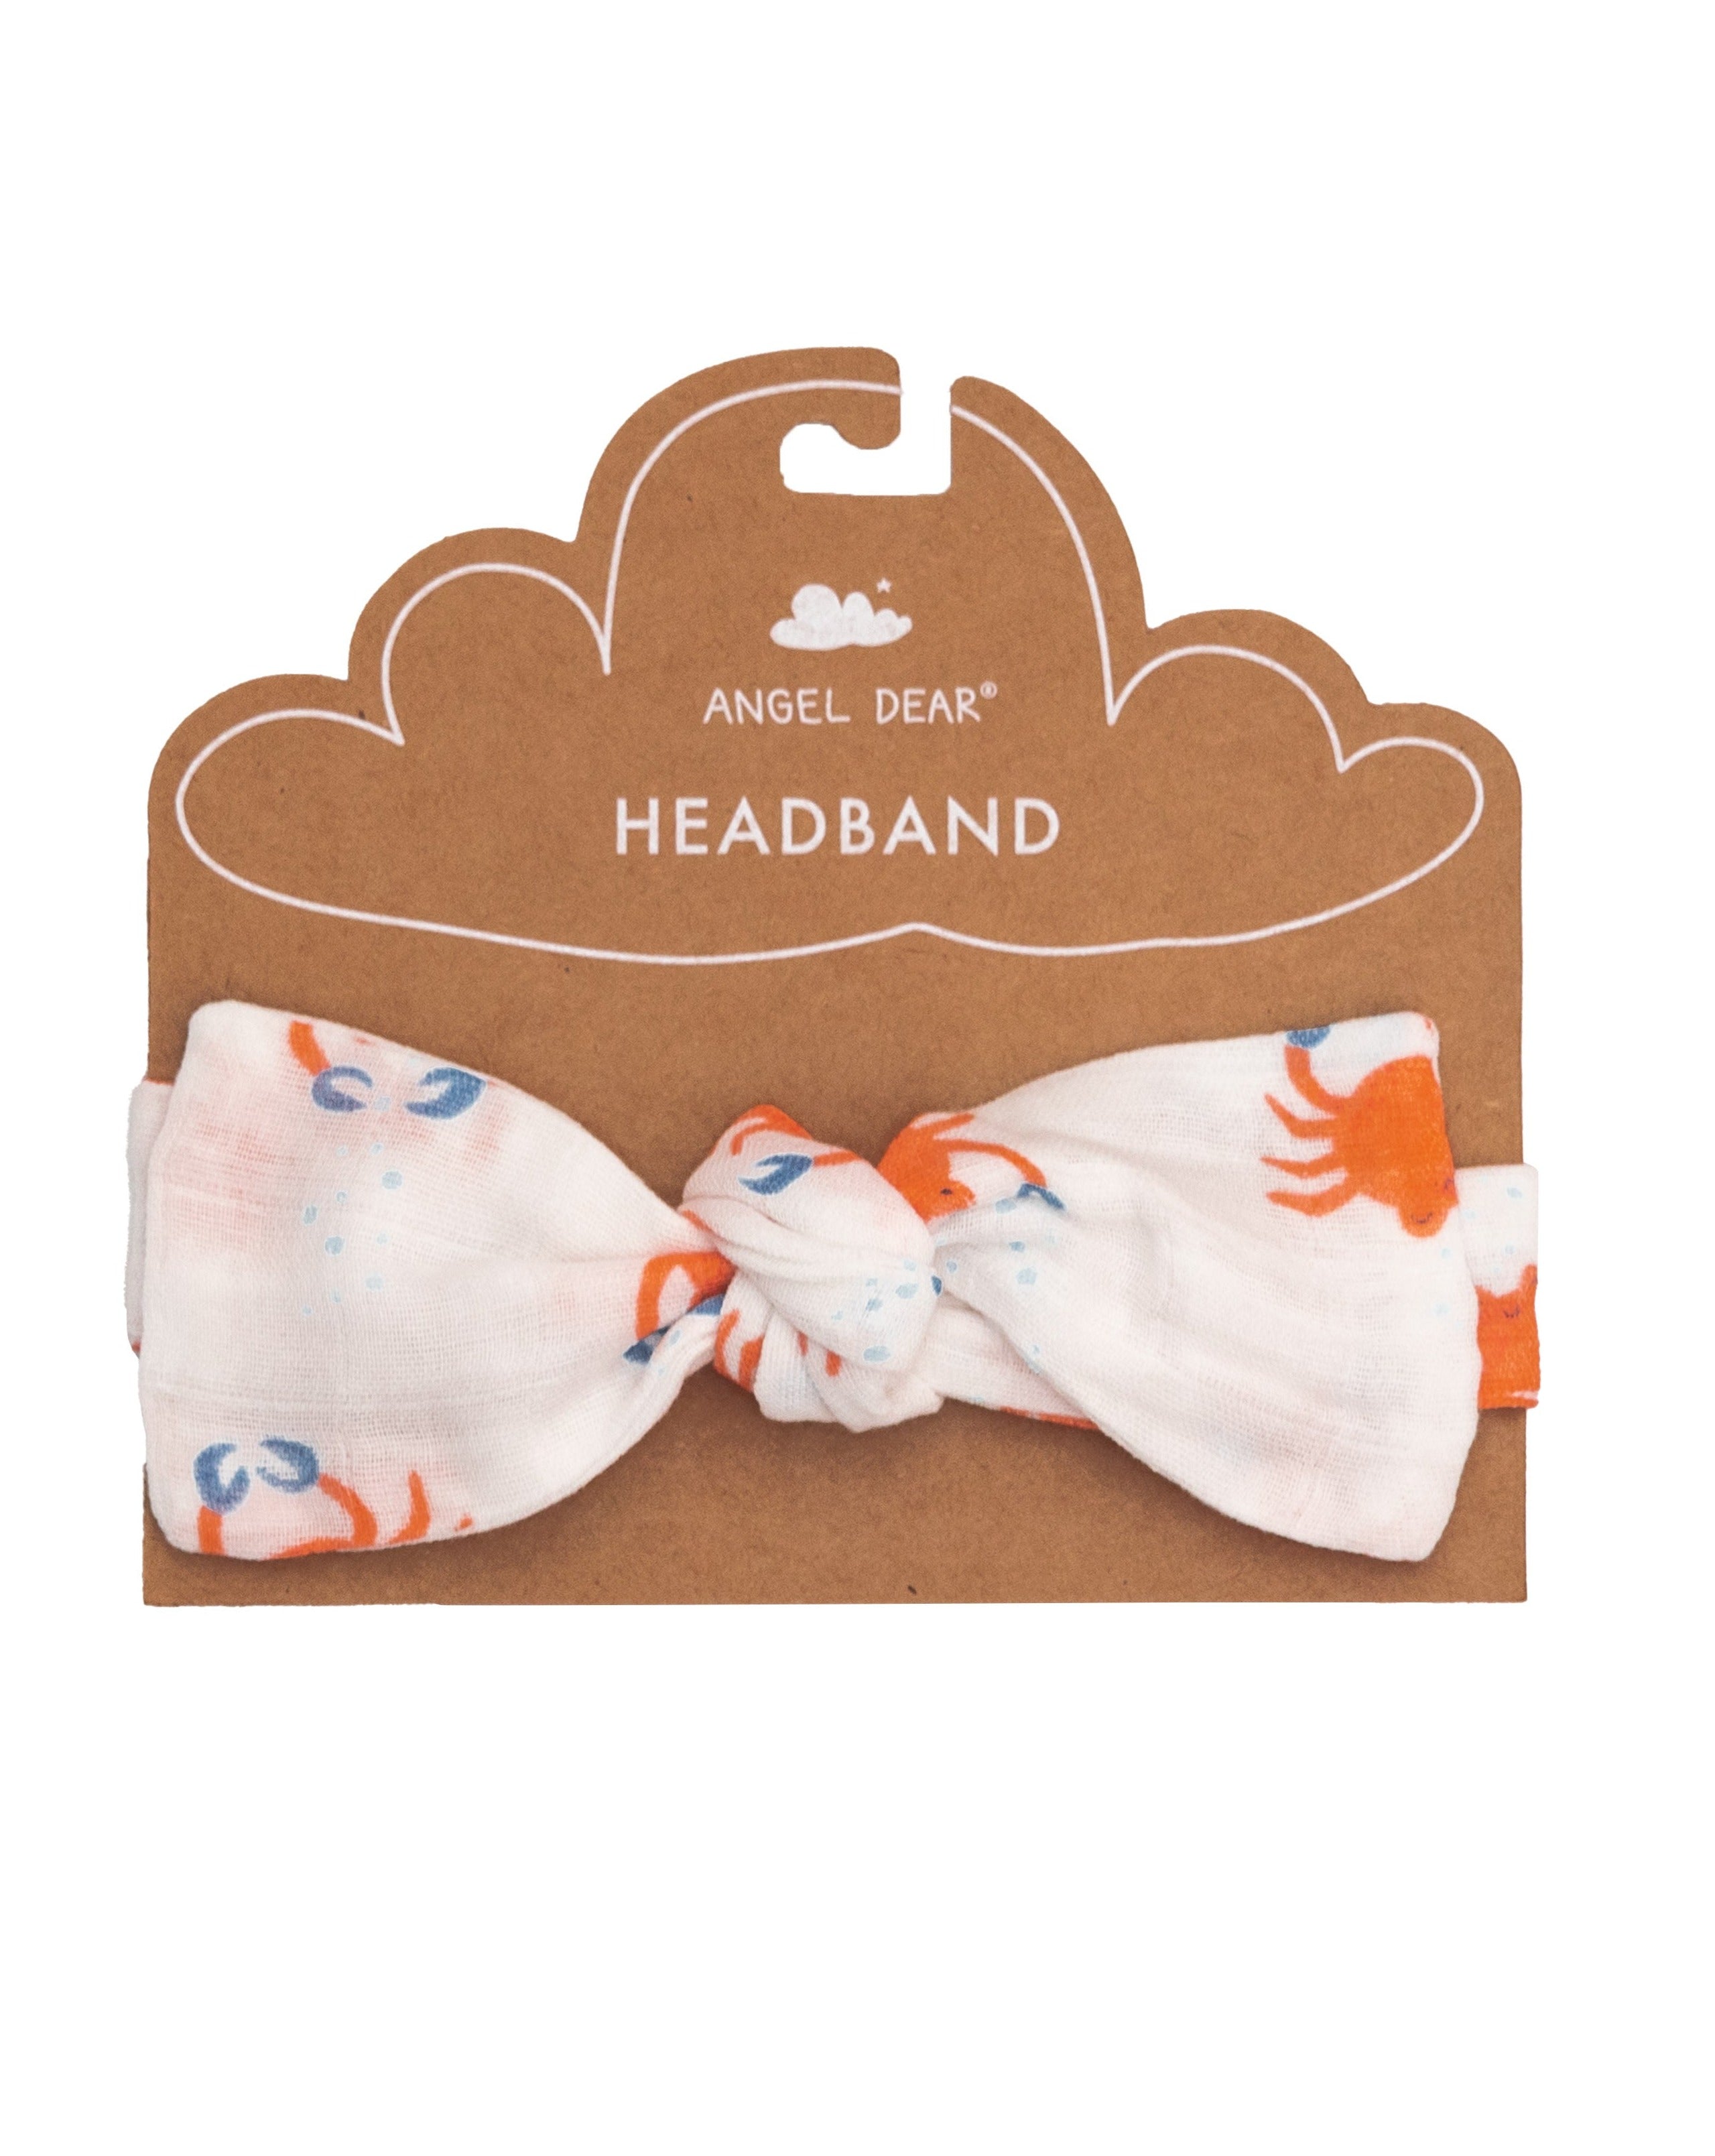 Crabby Cuties and Headband- Henley Shortall